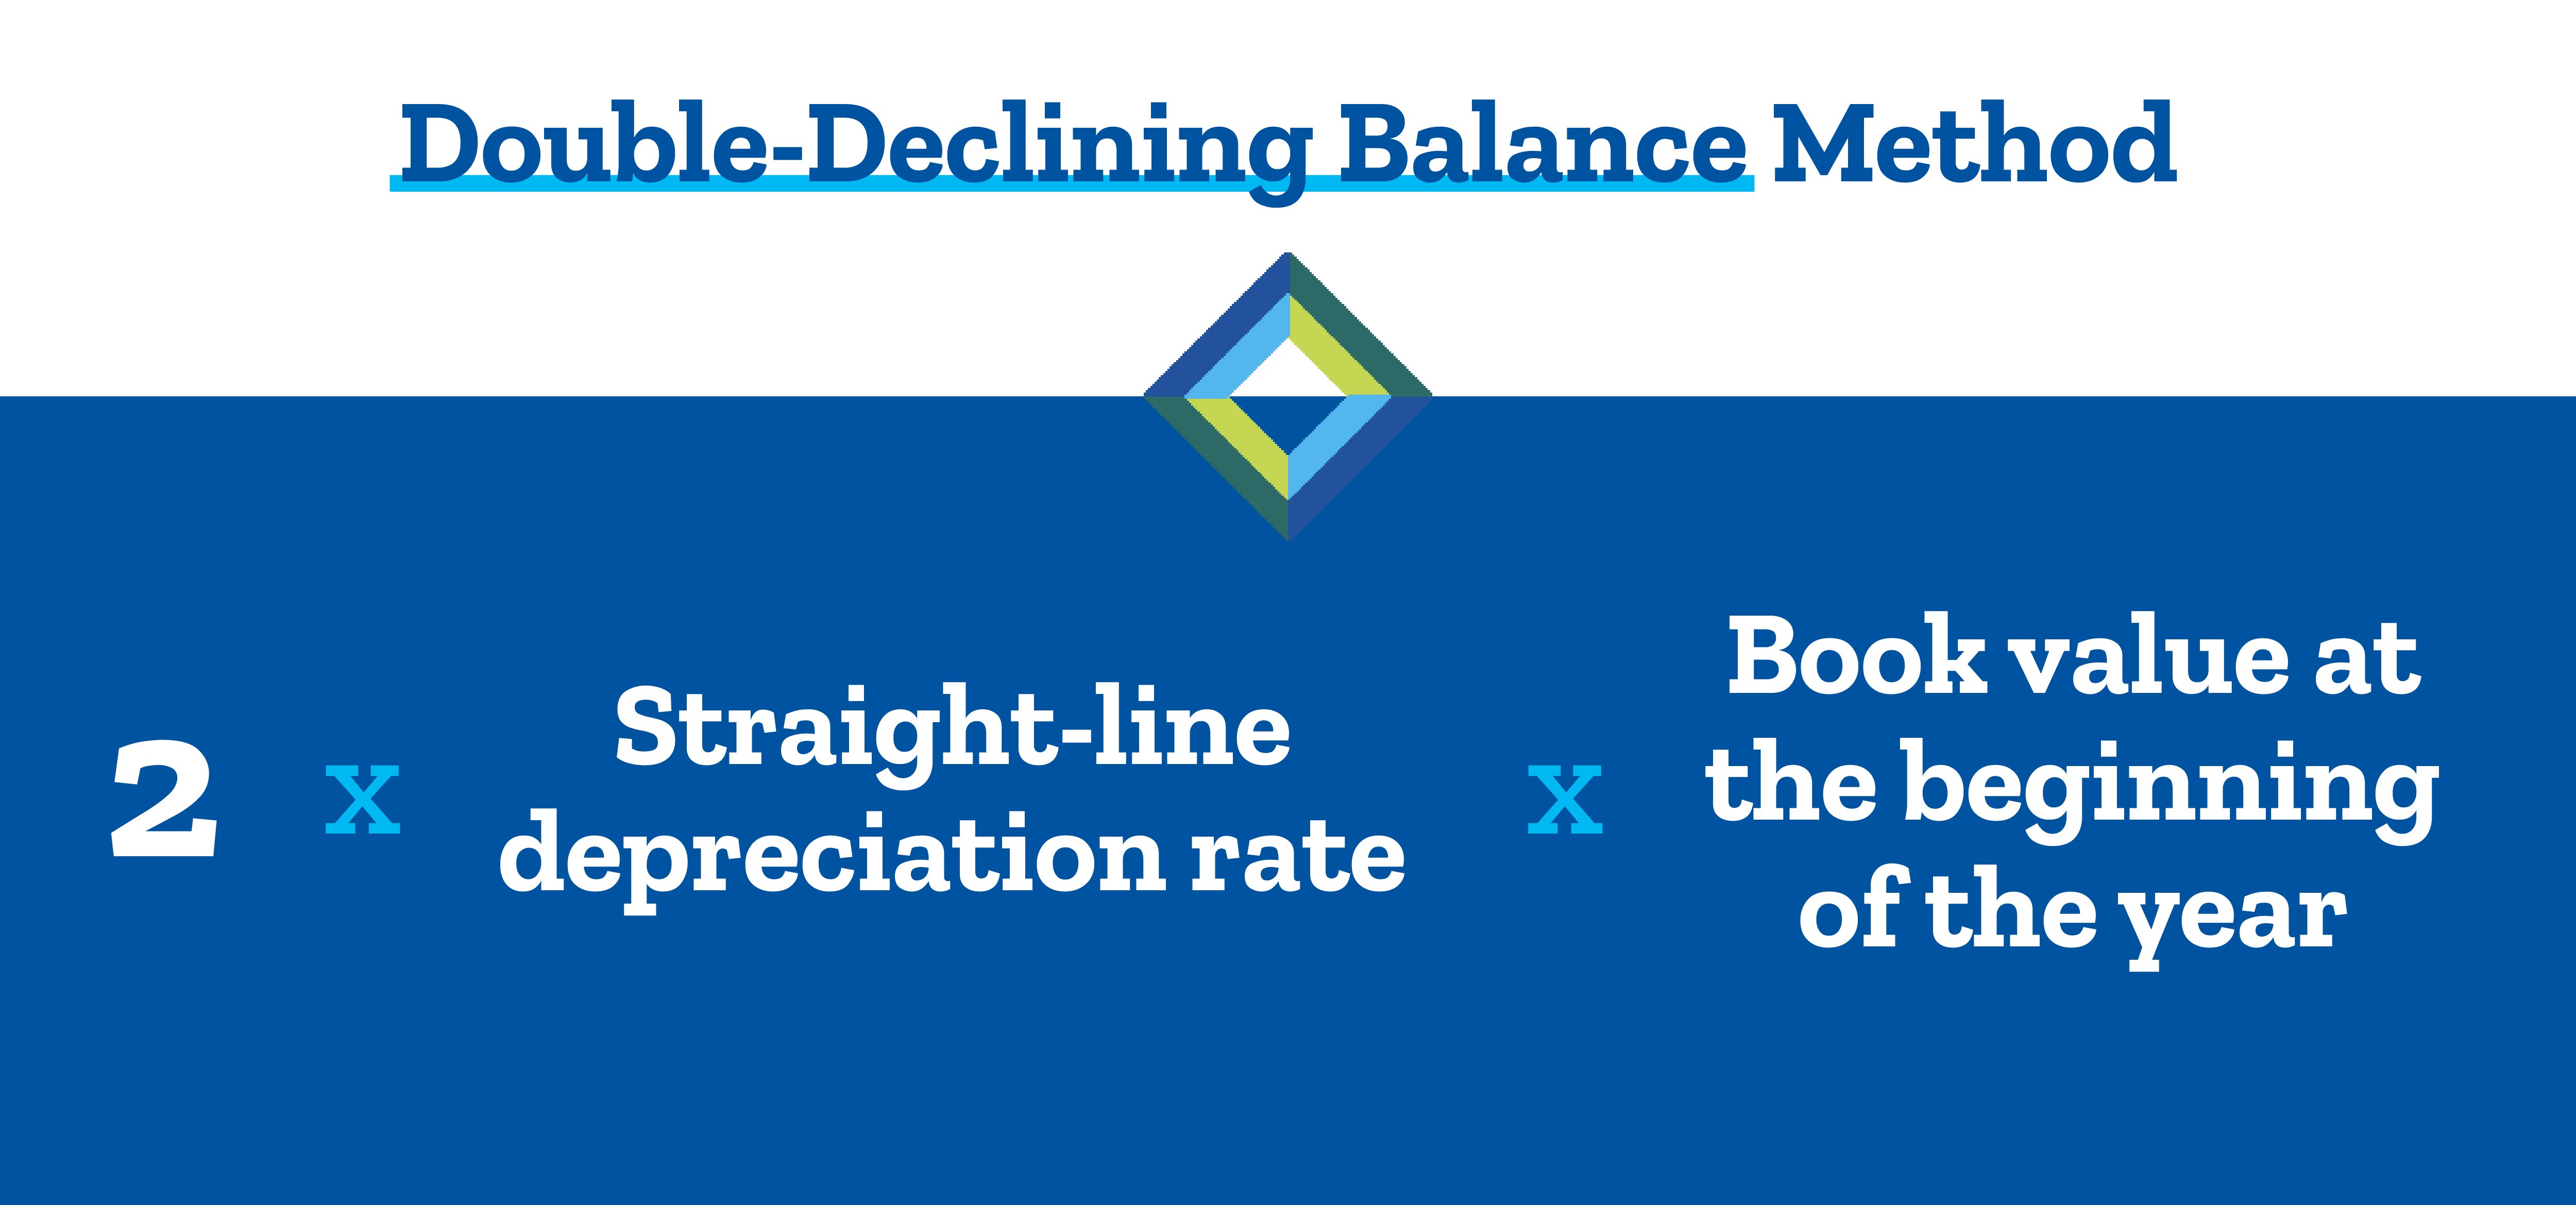 Double-Declining Balance Method equation for calculating depreciating financed equipment